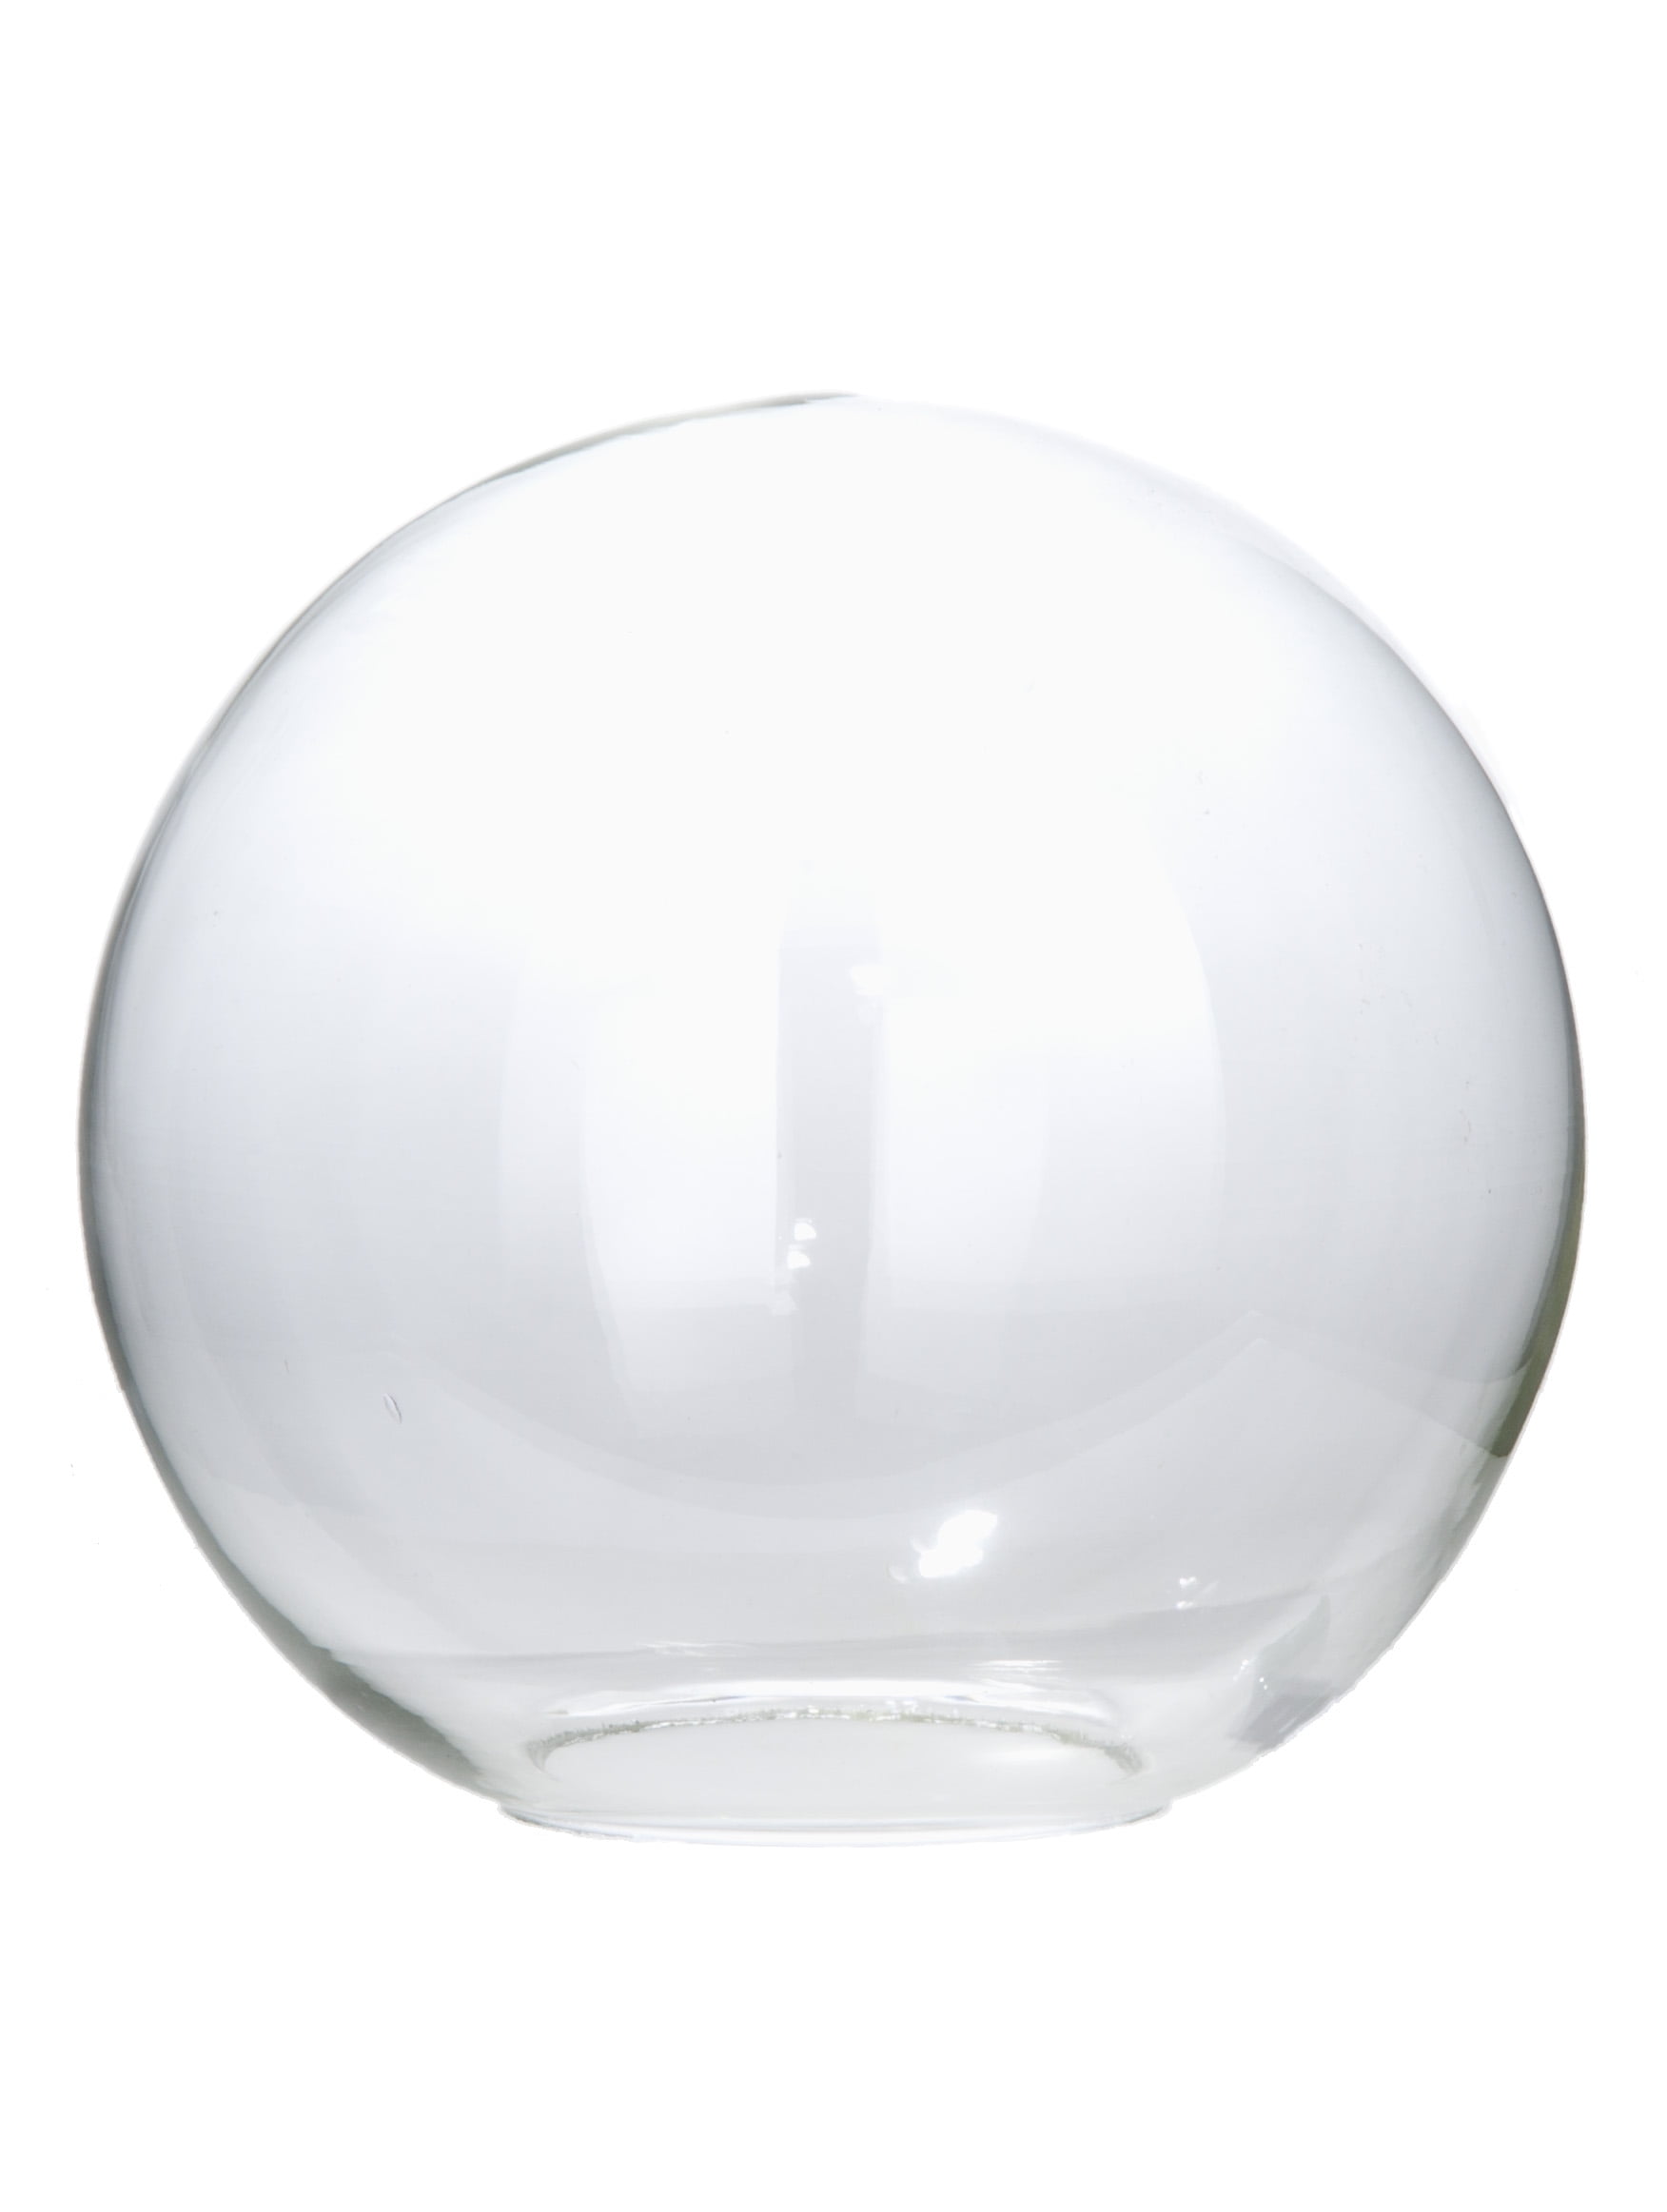 B&P Lamp® 10 Diameter, Clear Glass Neckless Ball Shade, 4 Fitter 